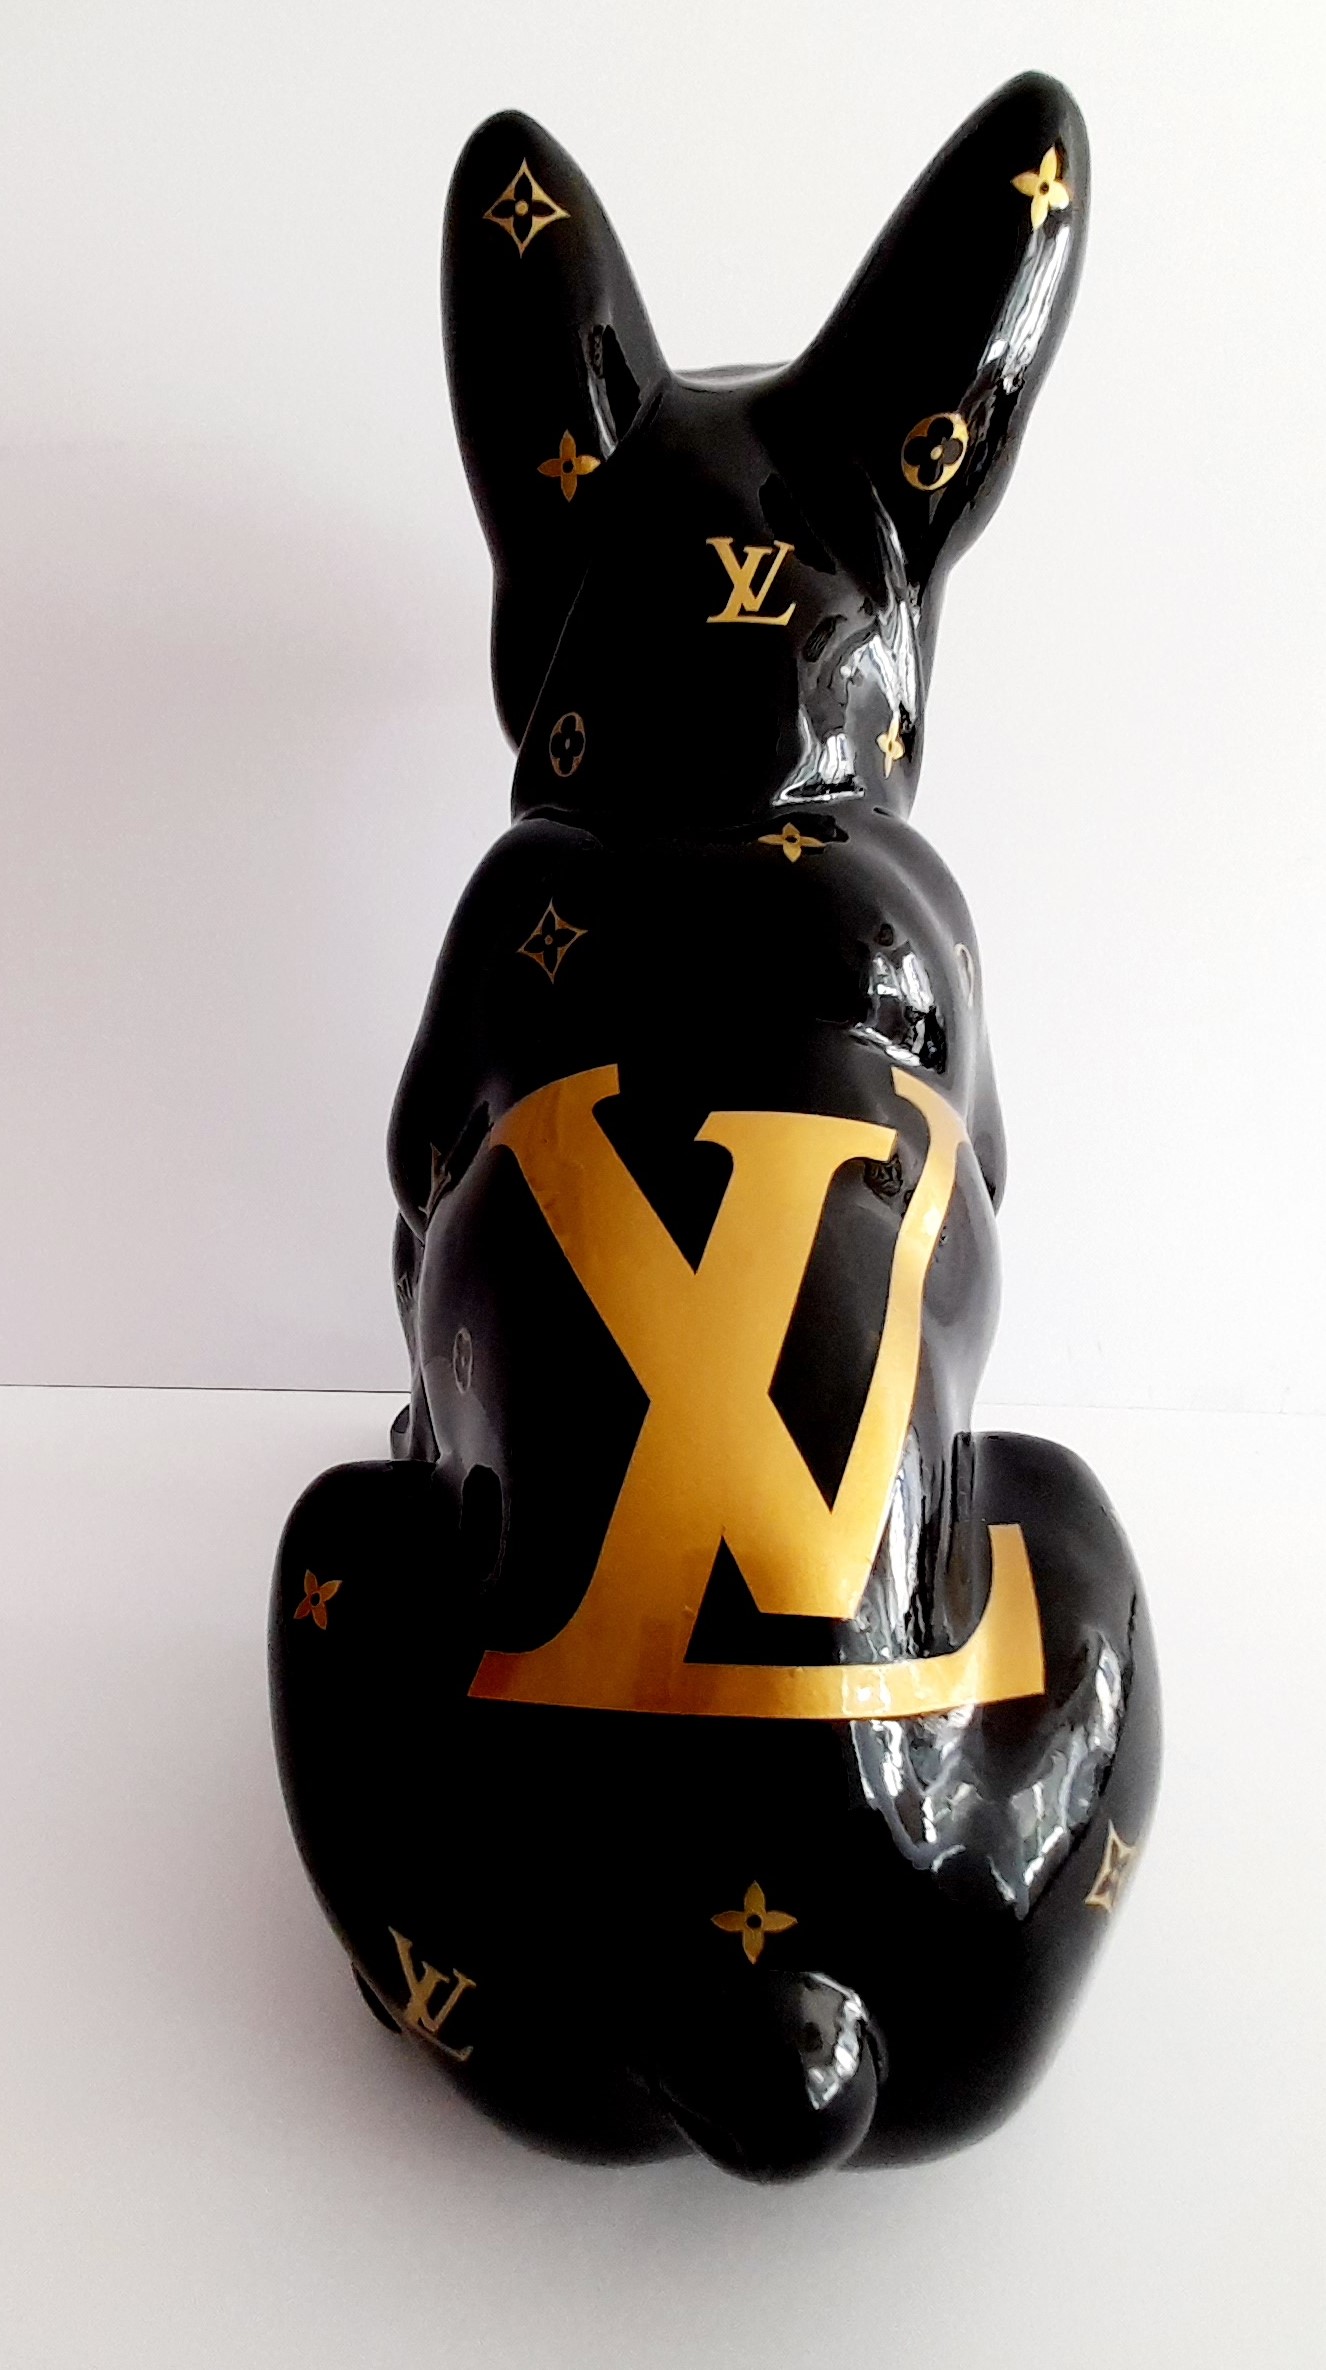 Patrick KONRAD - Louis Vuitton Bulldog - Sculpture - Revelations - Plazzart